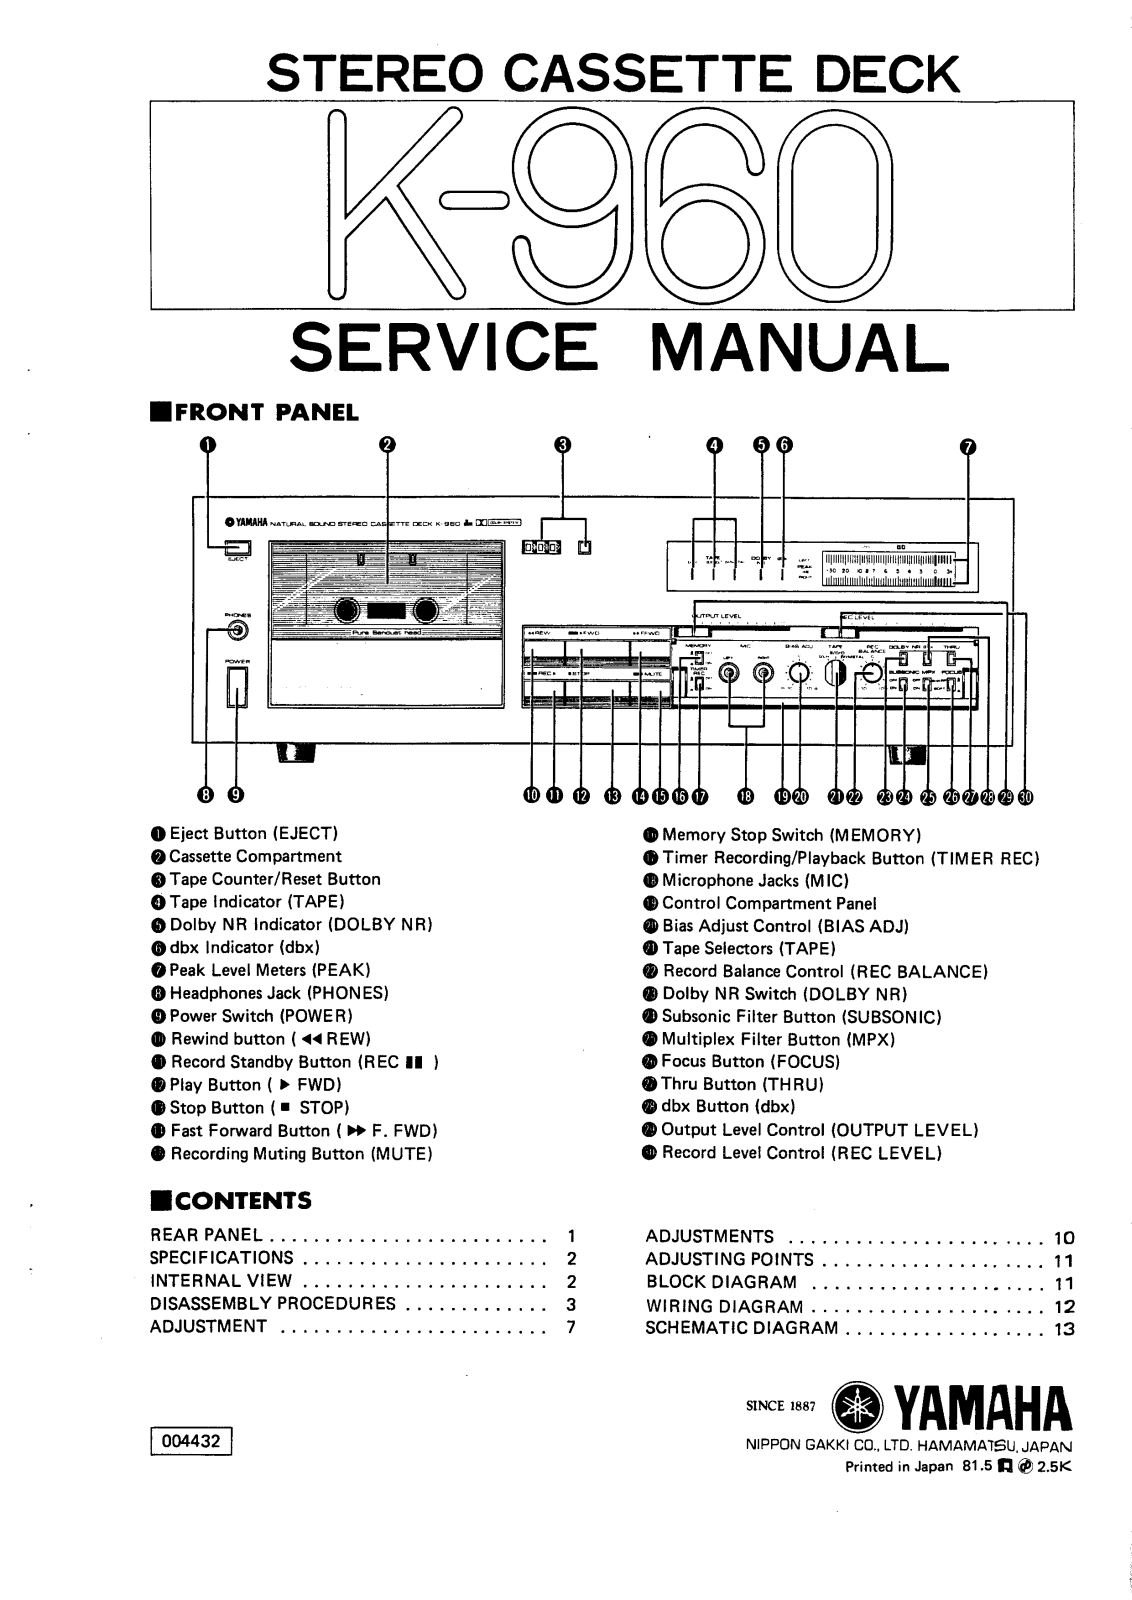 Yamaha K-960 Service Manual